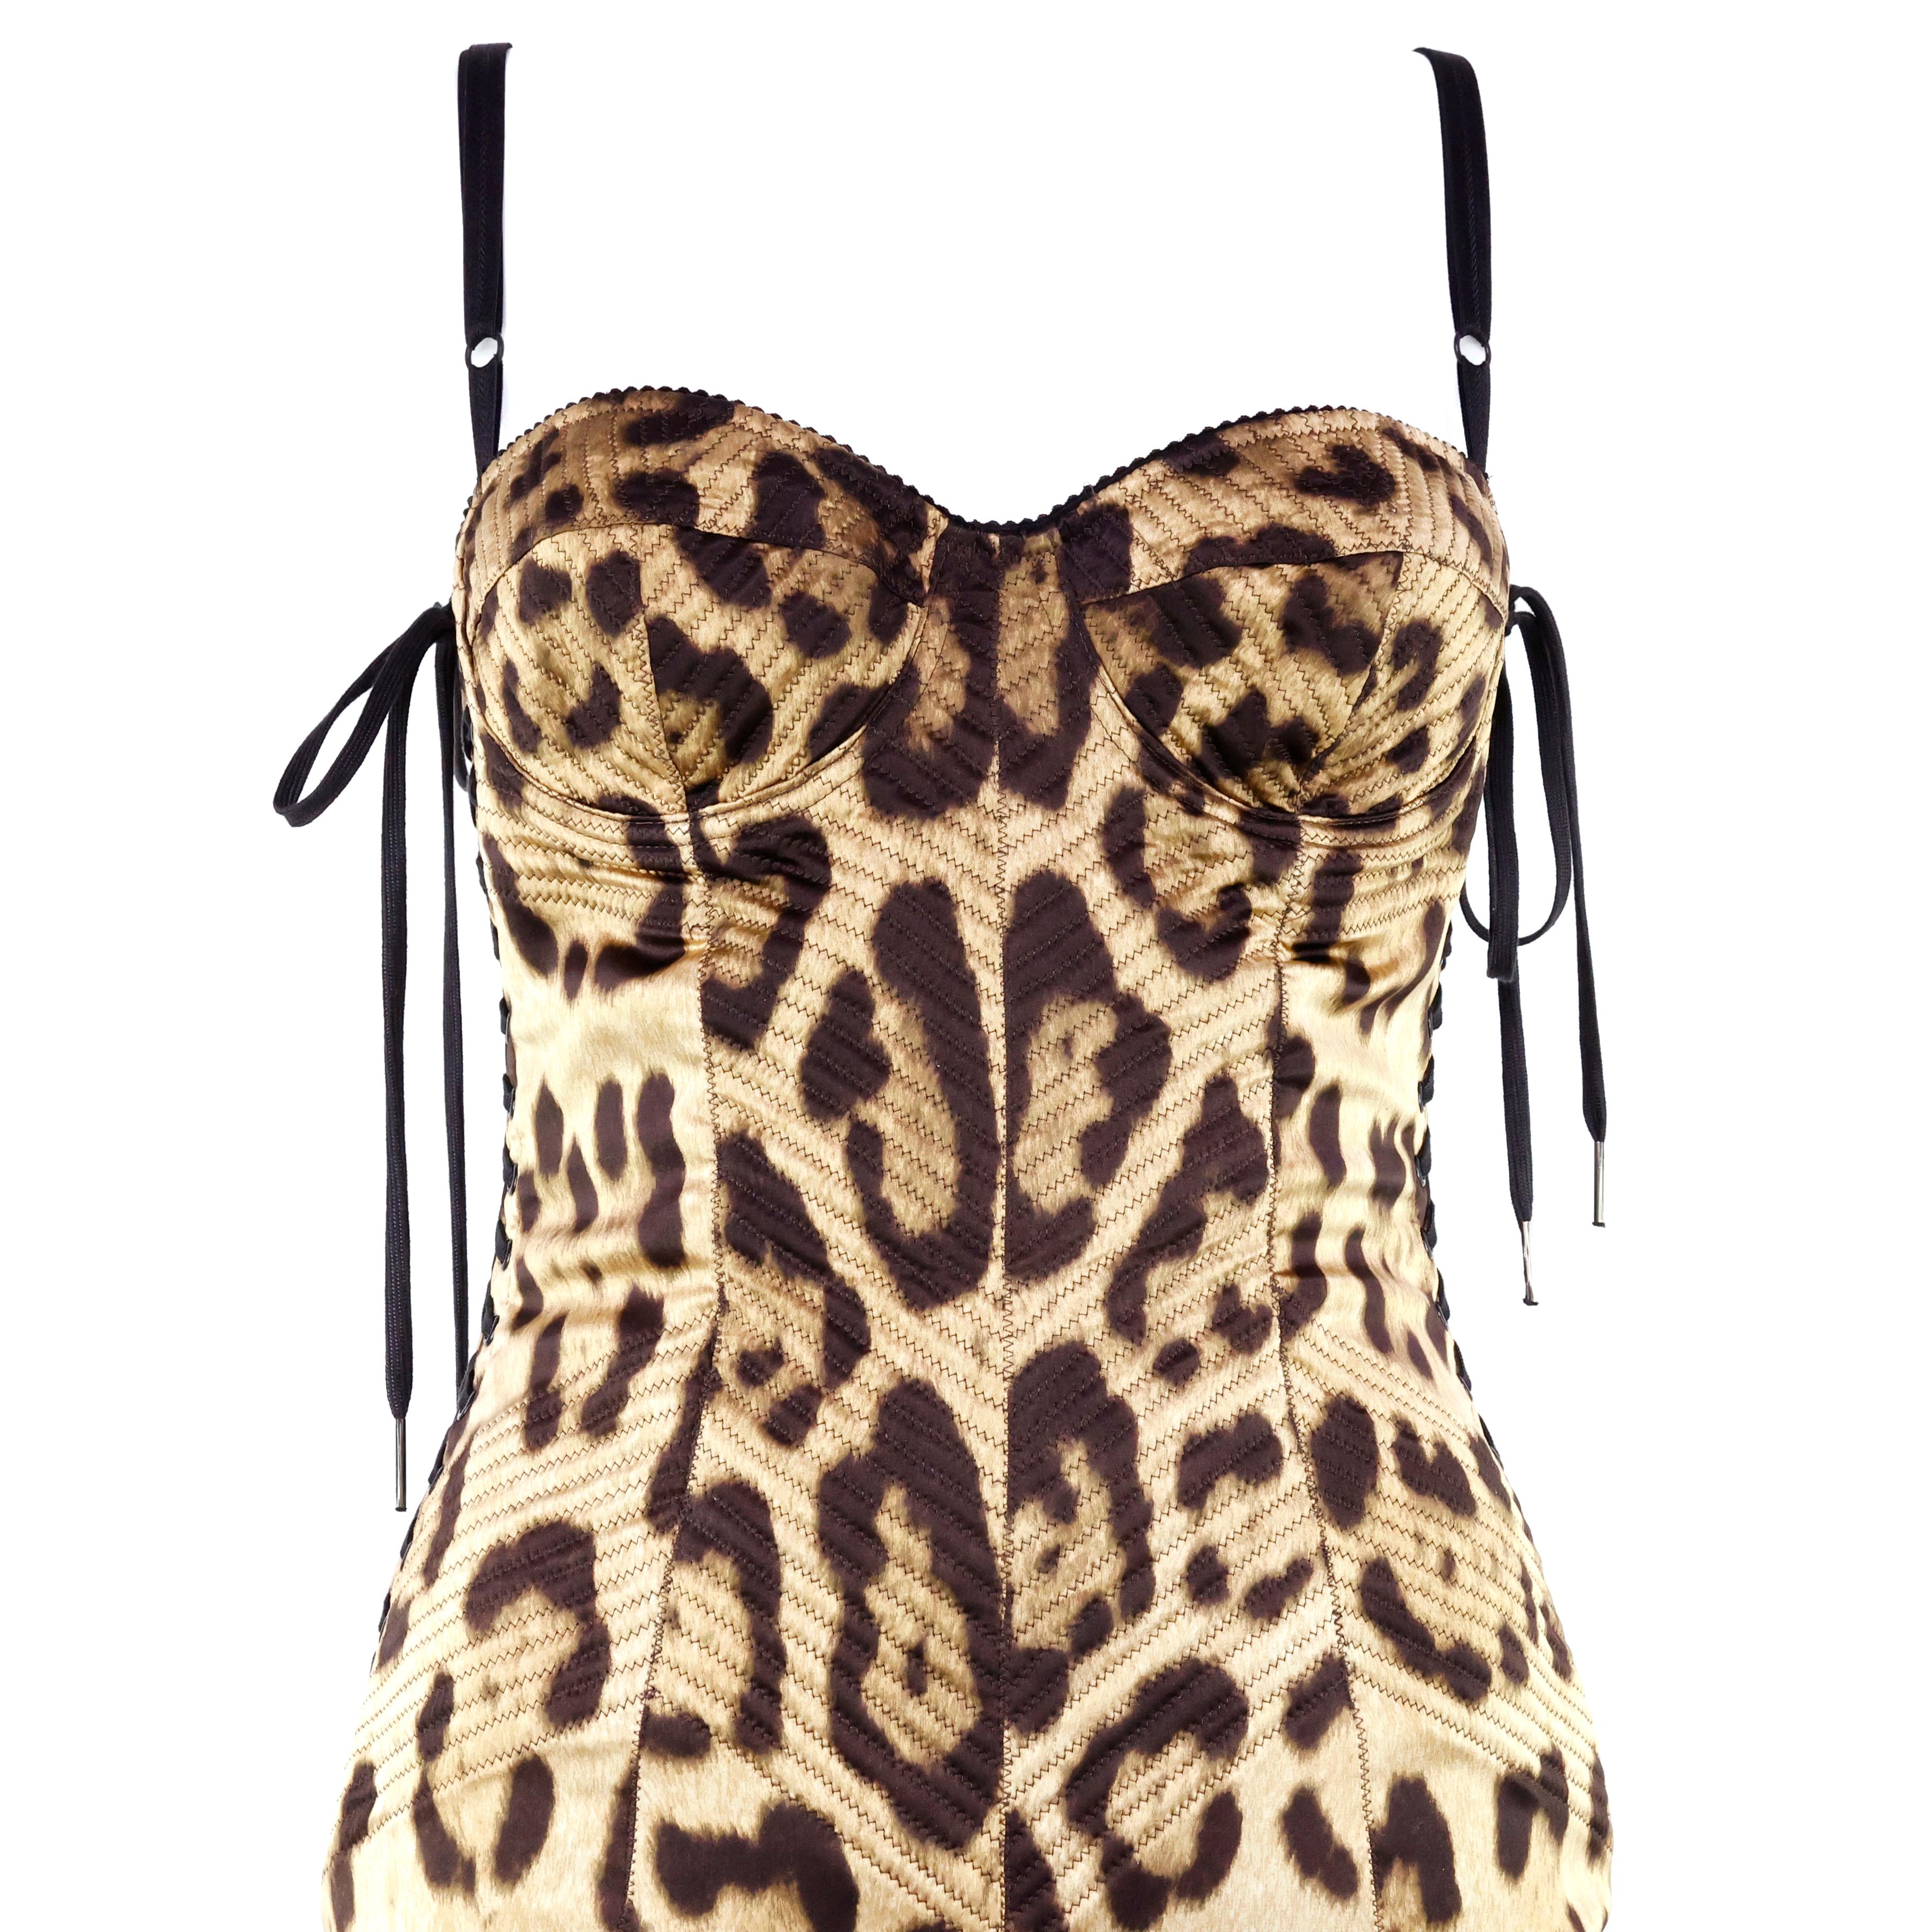 Dolce & Gabbana Leopard Corset Bustier Silk Dress In Excellent Condition For Sale In Bressanone, IT